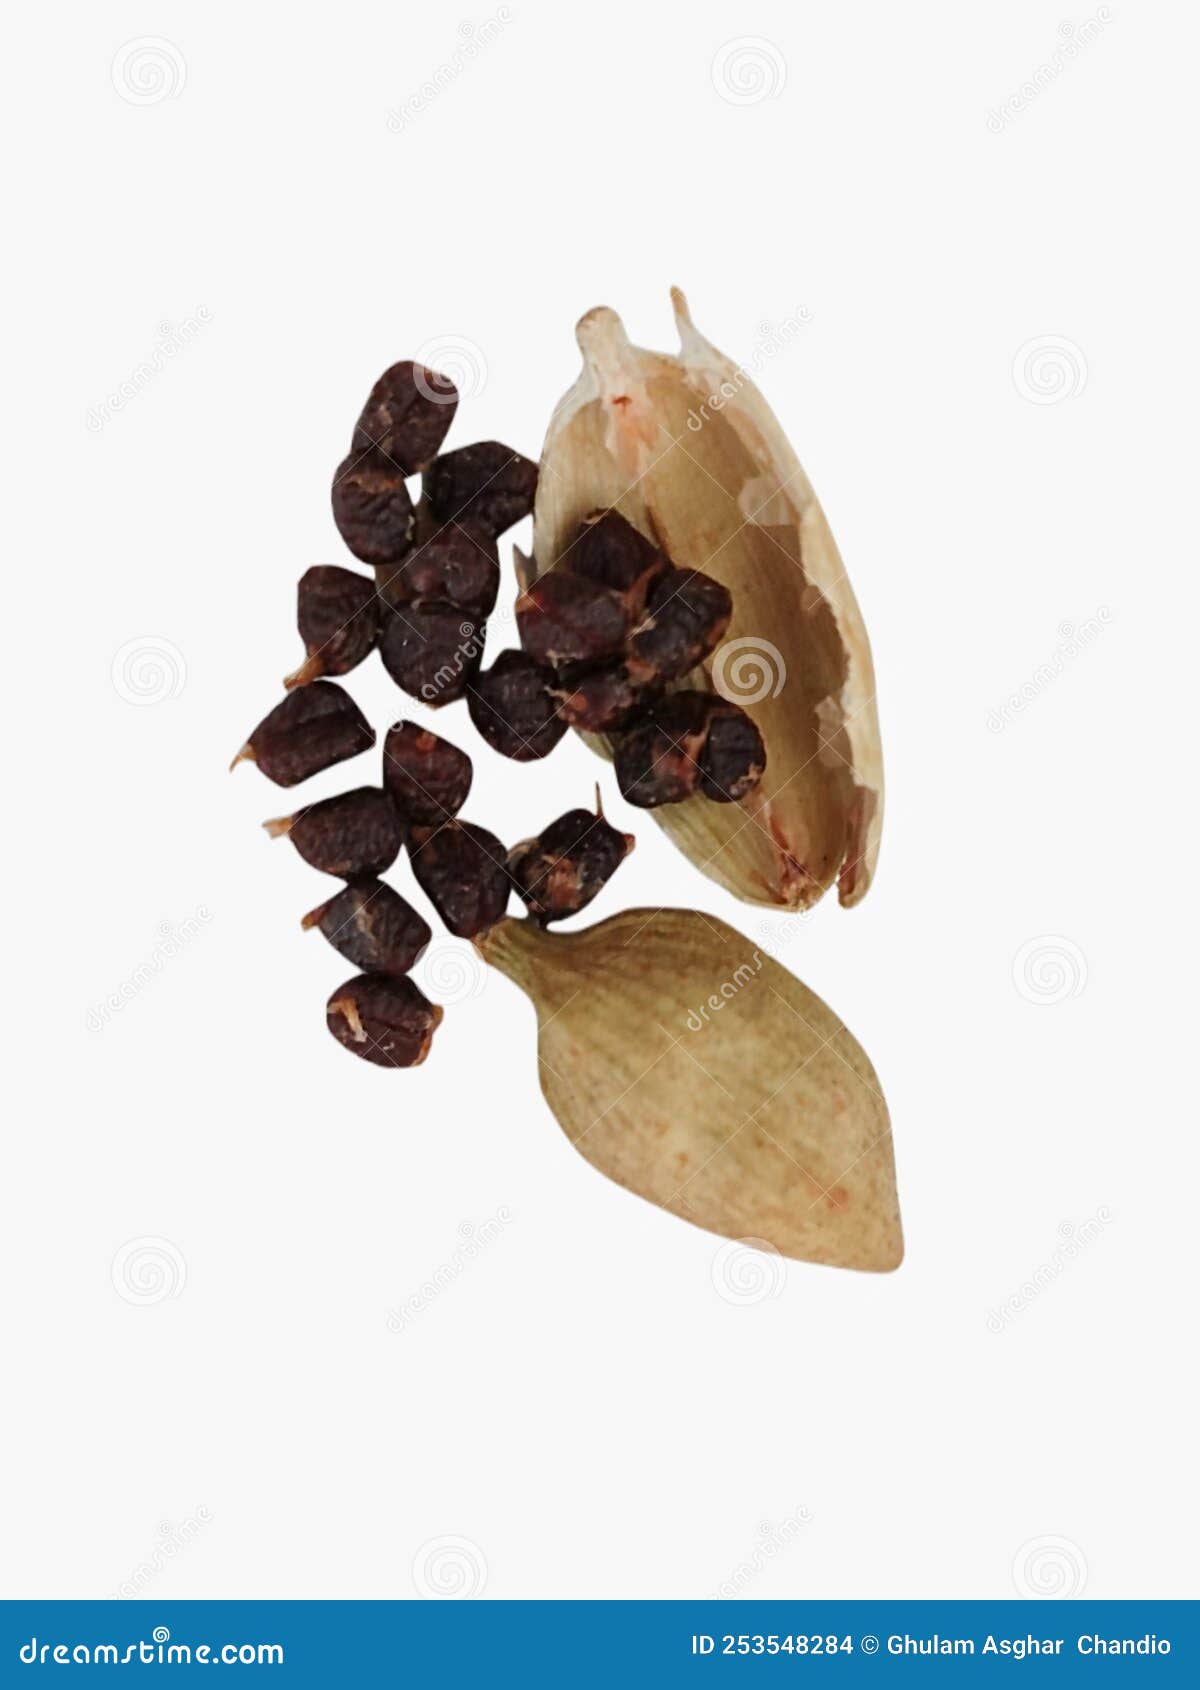 cardamom or elaichi or yelakkai or ellakkaya or kardamom or hil or elettaria with its tiny black seeds in white background